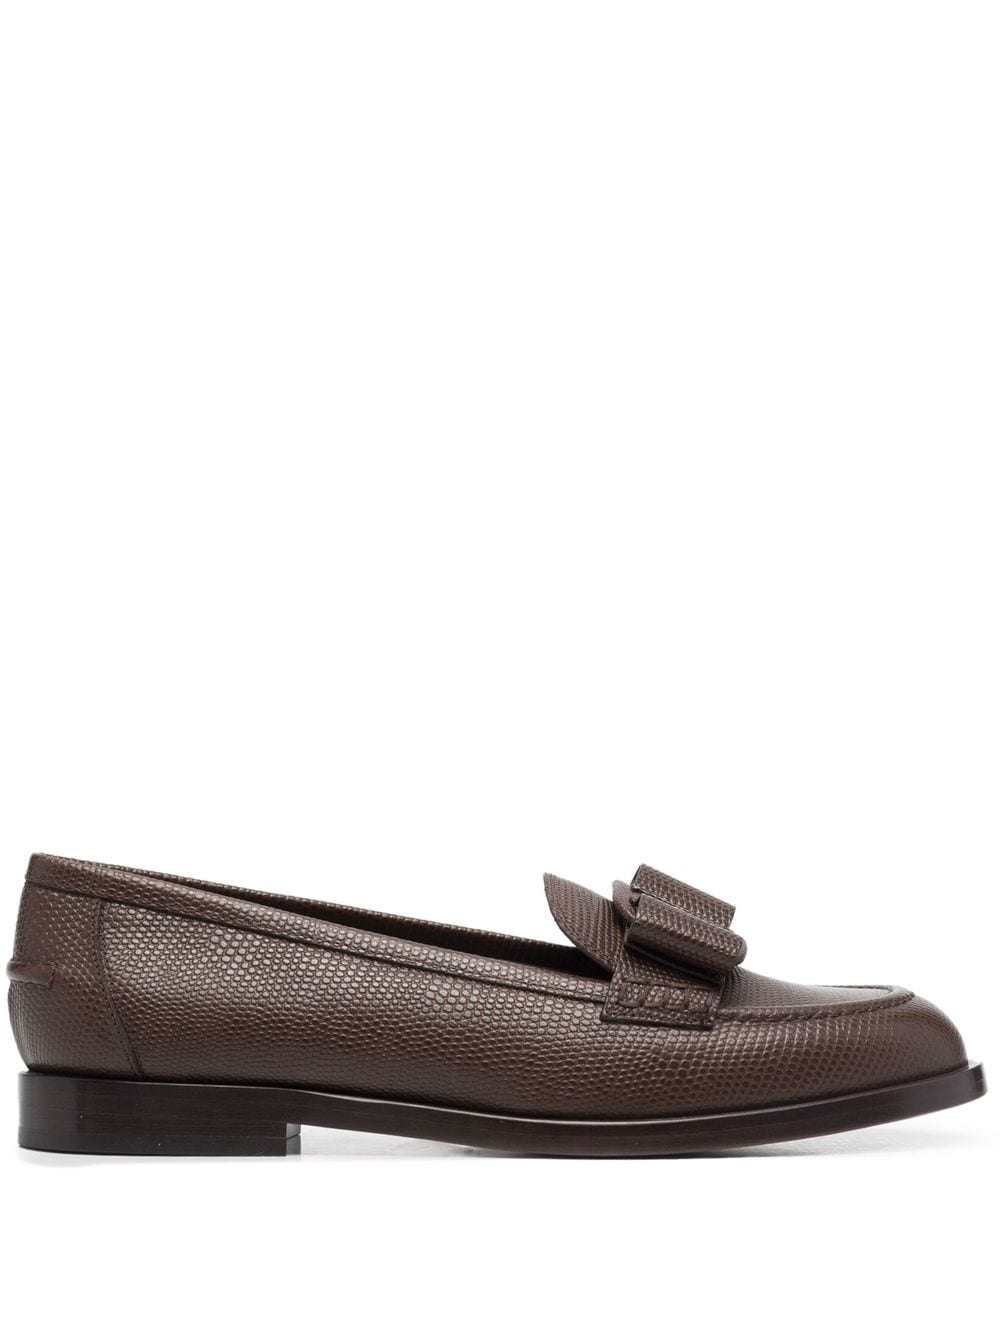 Ferragamo Viva bow leather loafers - Brown